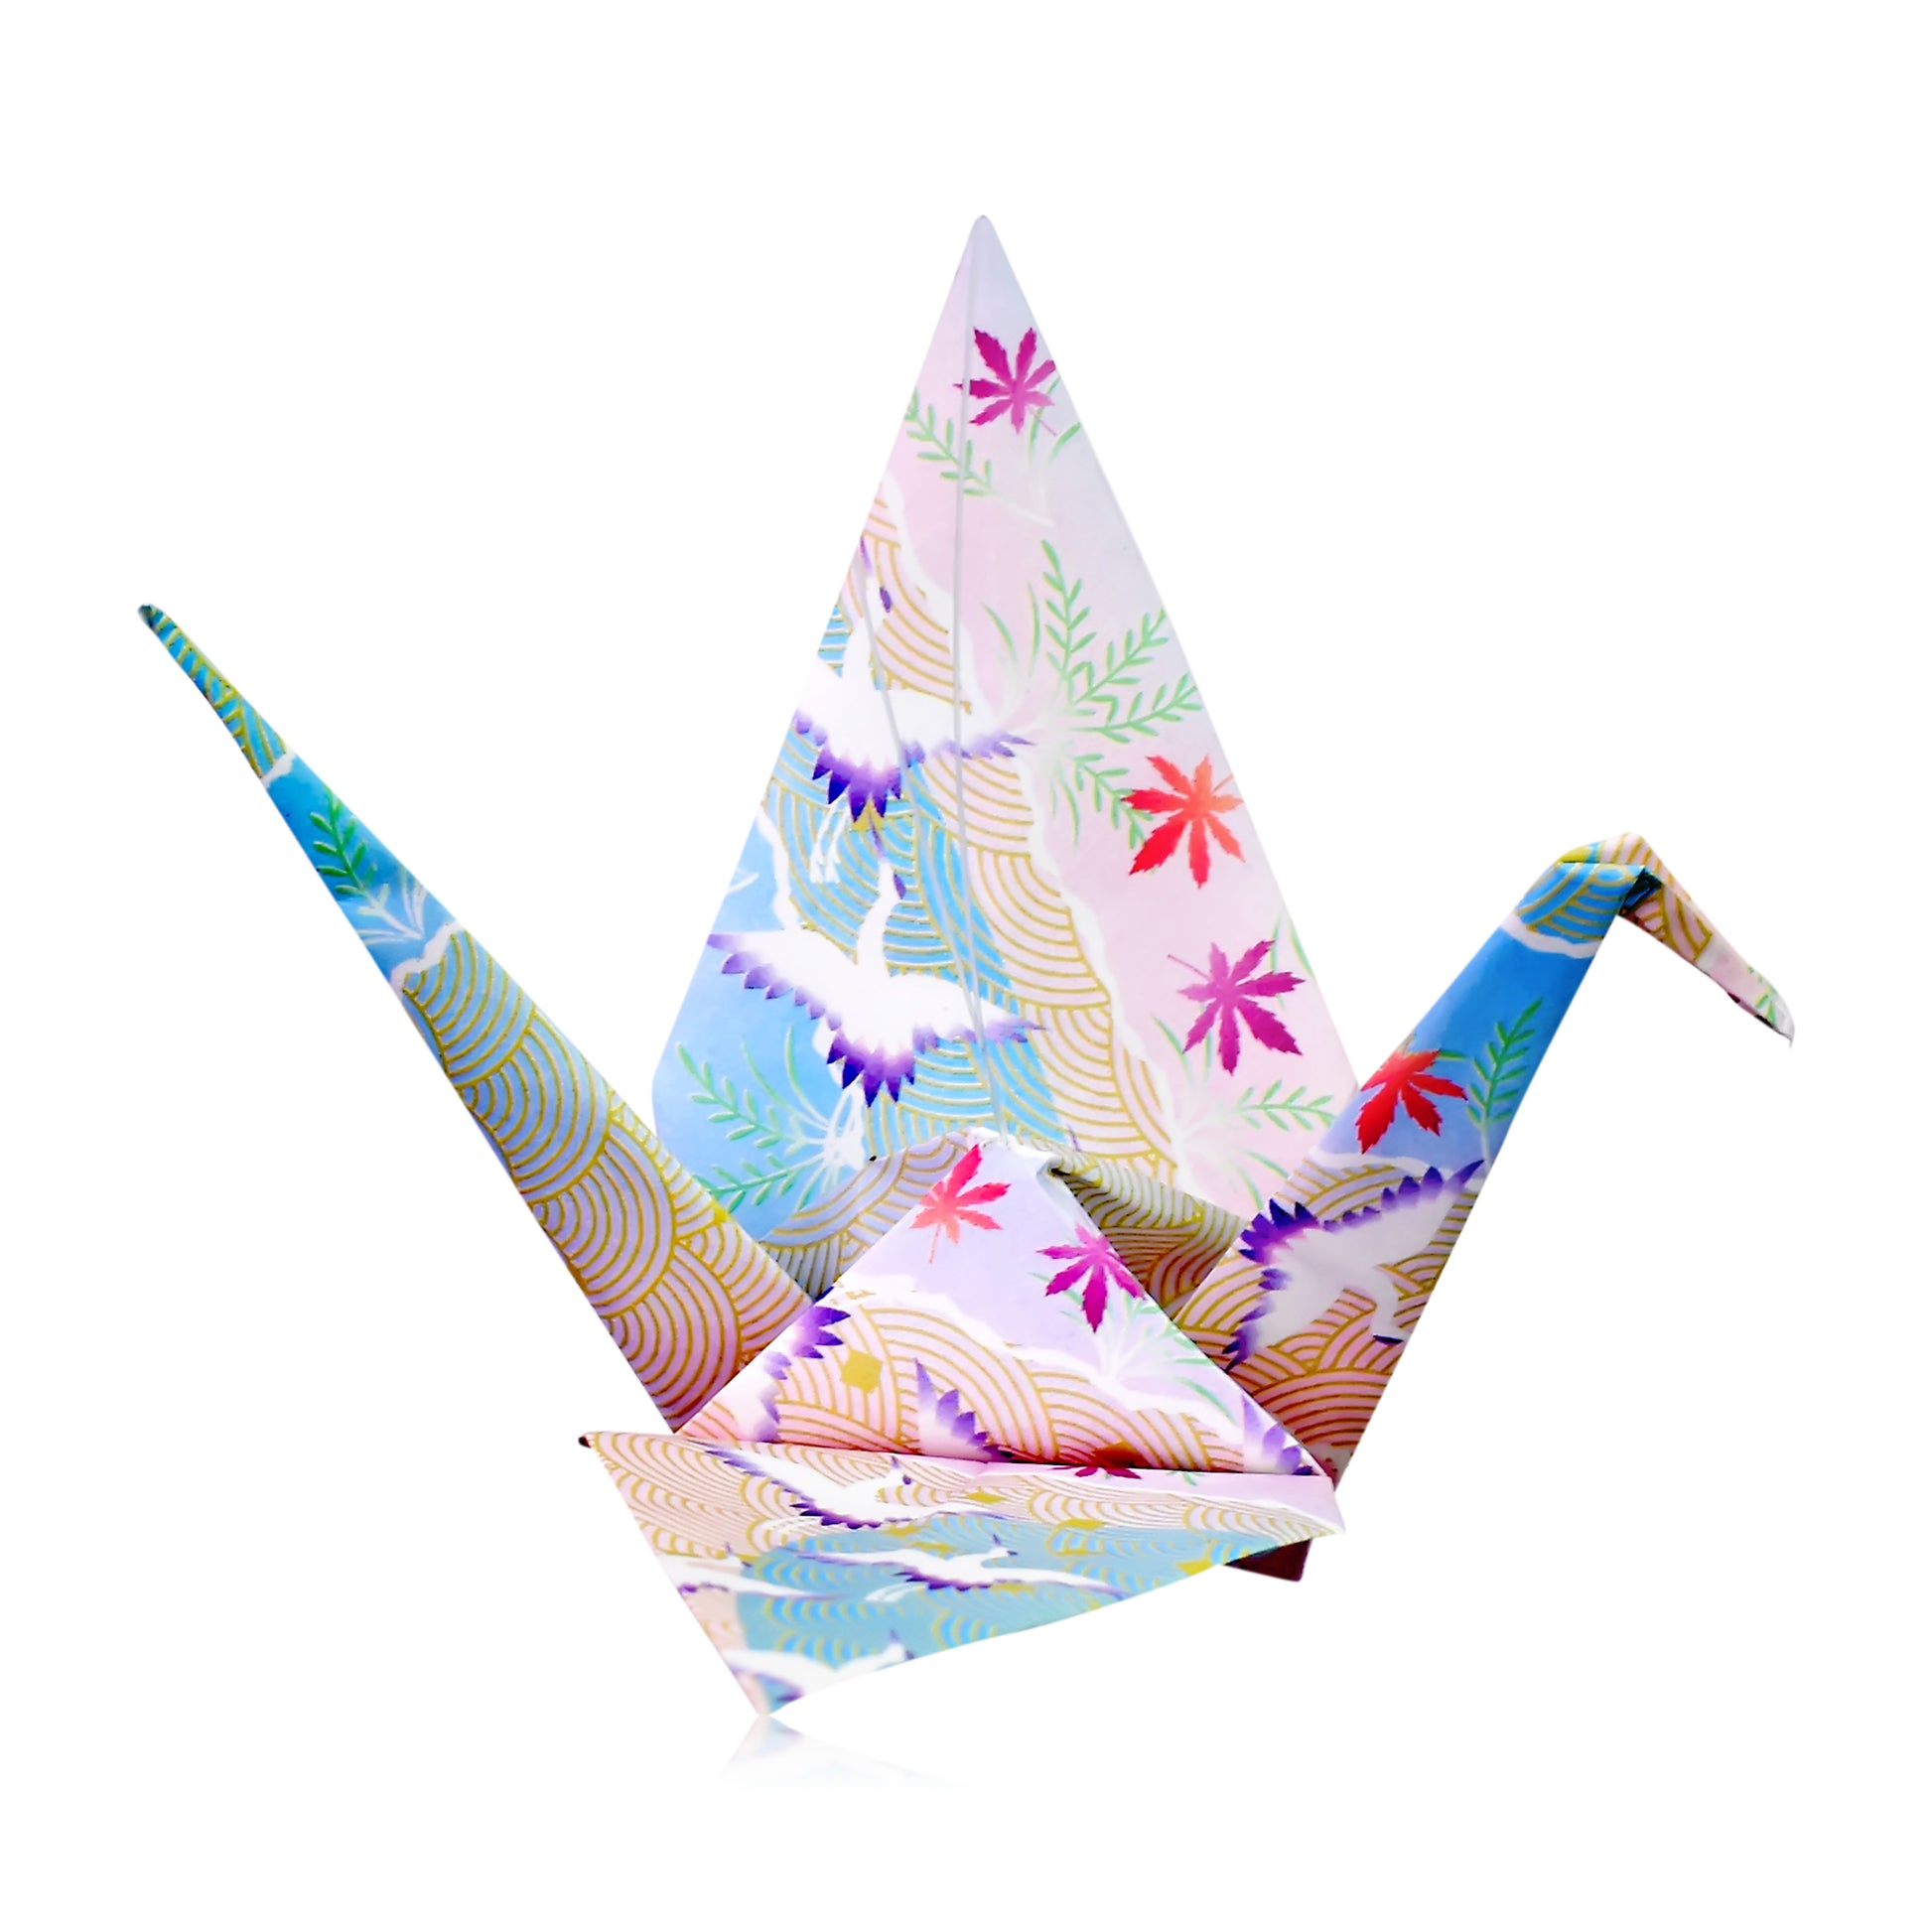 Unique Birthday Gift: Aquamarine March Birthstone & Origami Cranes